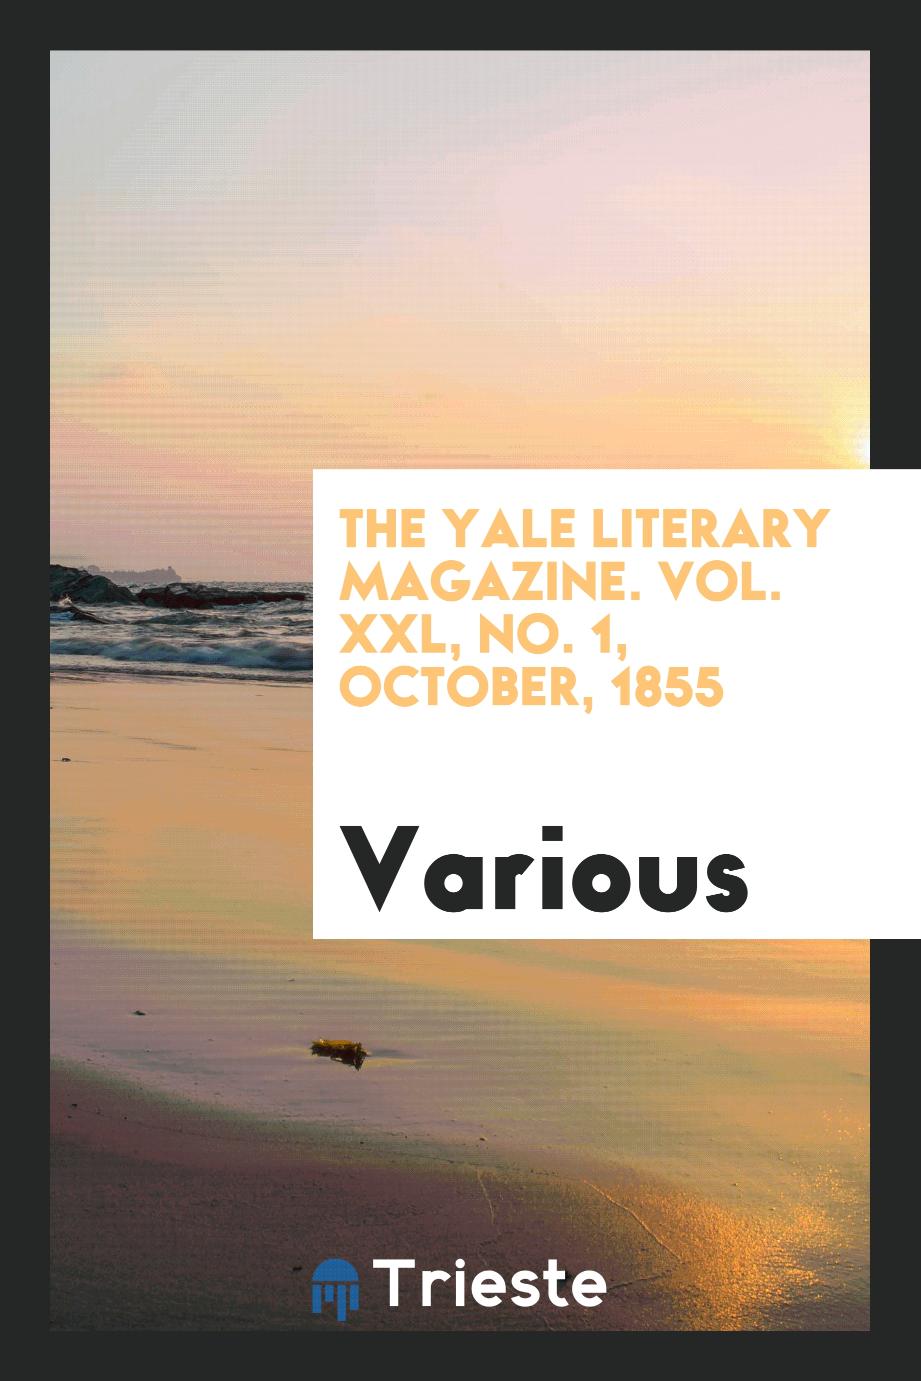 The Yale literary magazine. Vol. XXL, No. 1, October, 1855